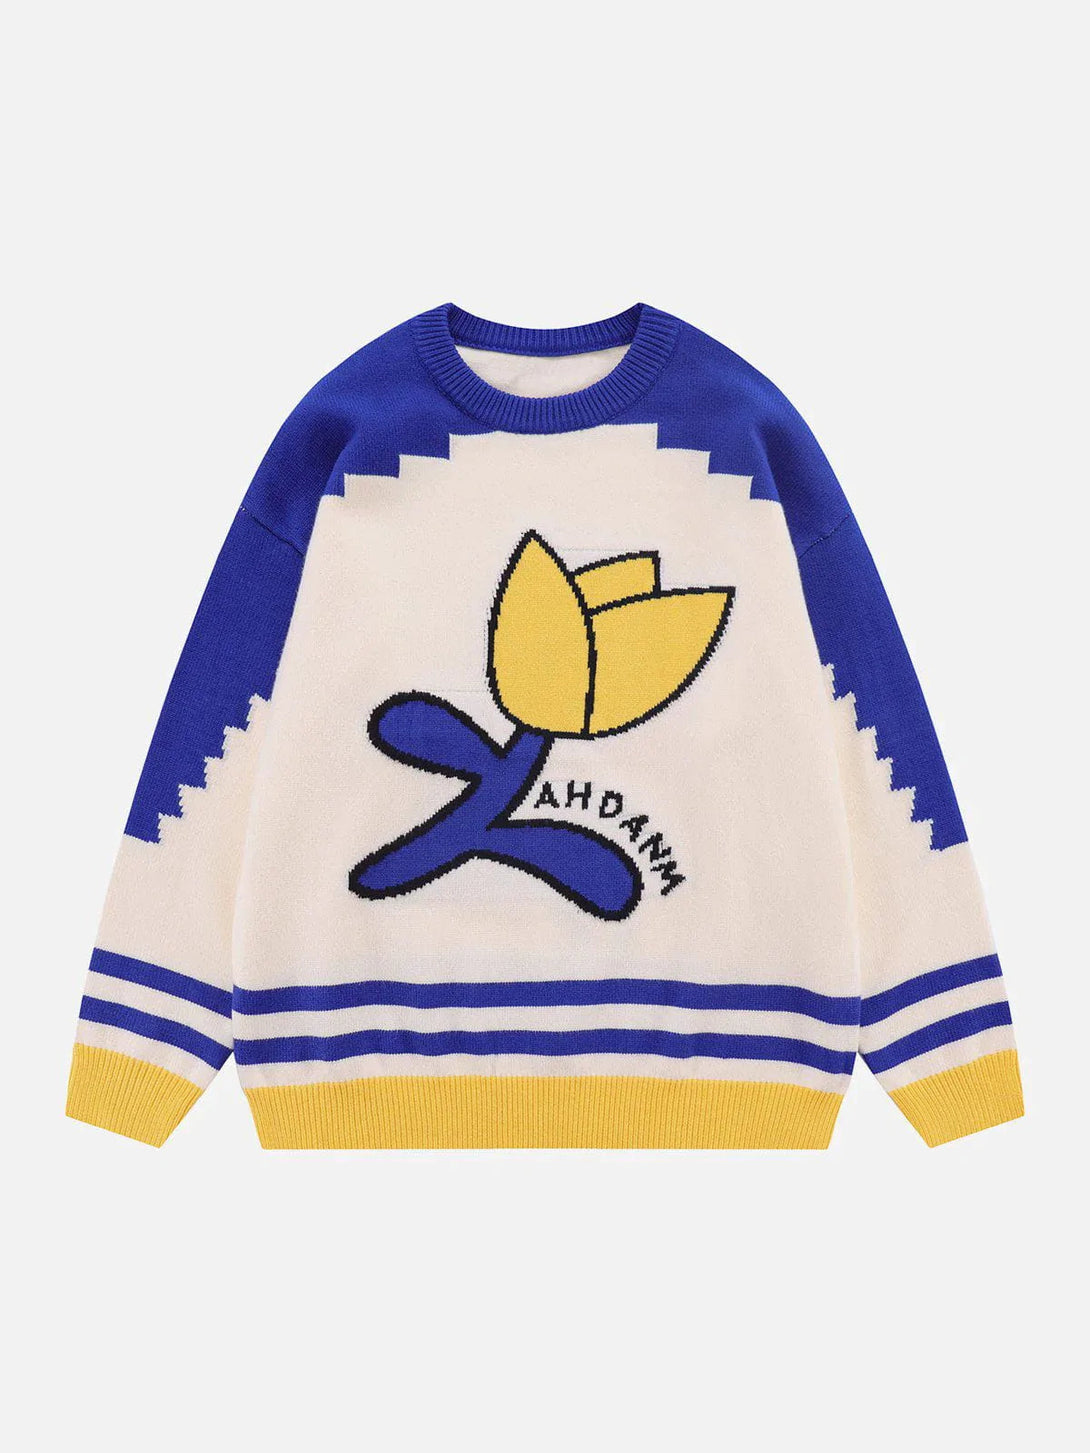 Majesda® - Flower Jacquard Sweater outfit ideas streetwear fashion